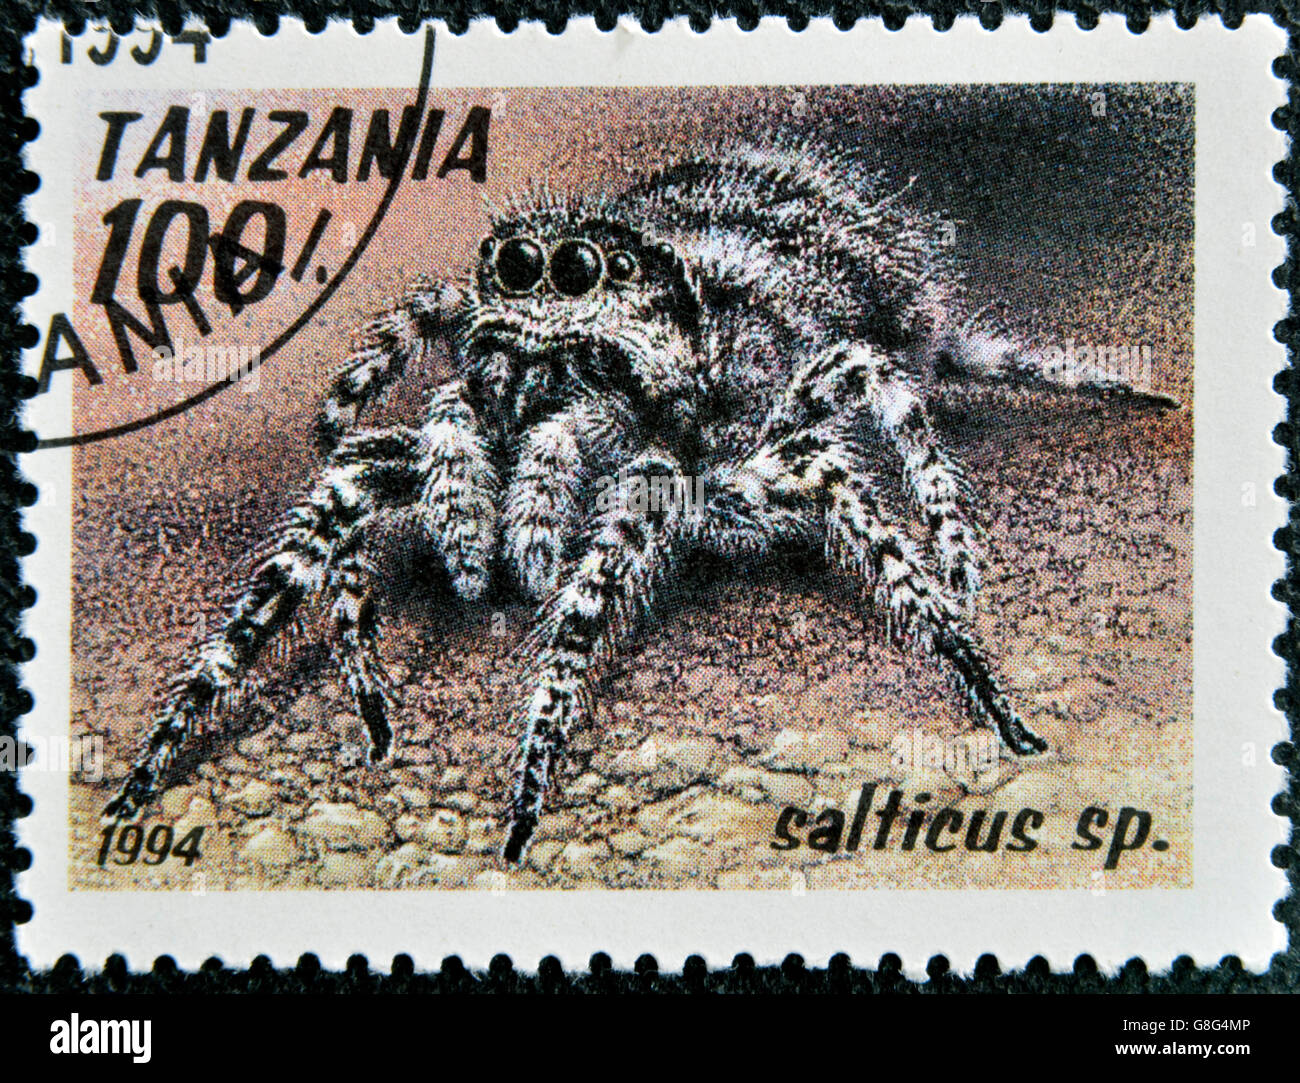 TANZANIA - CIRCA 1994: A stamp printed in Tanzania shows image of a salticus sp., circa 1994 Stock Photo